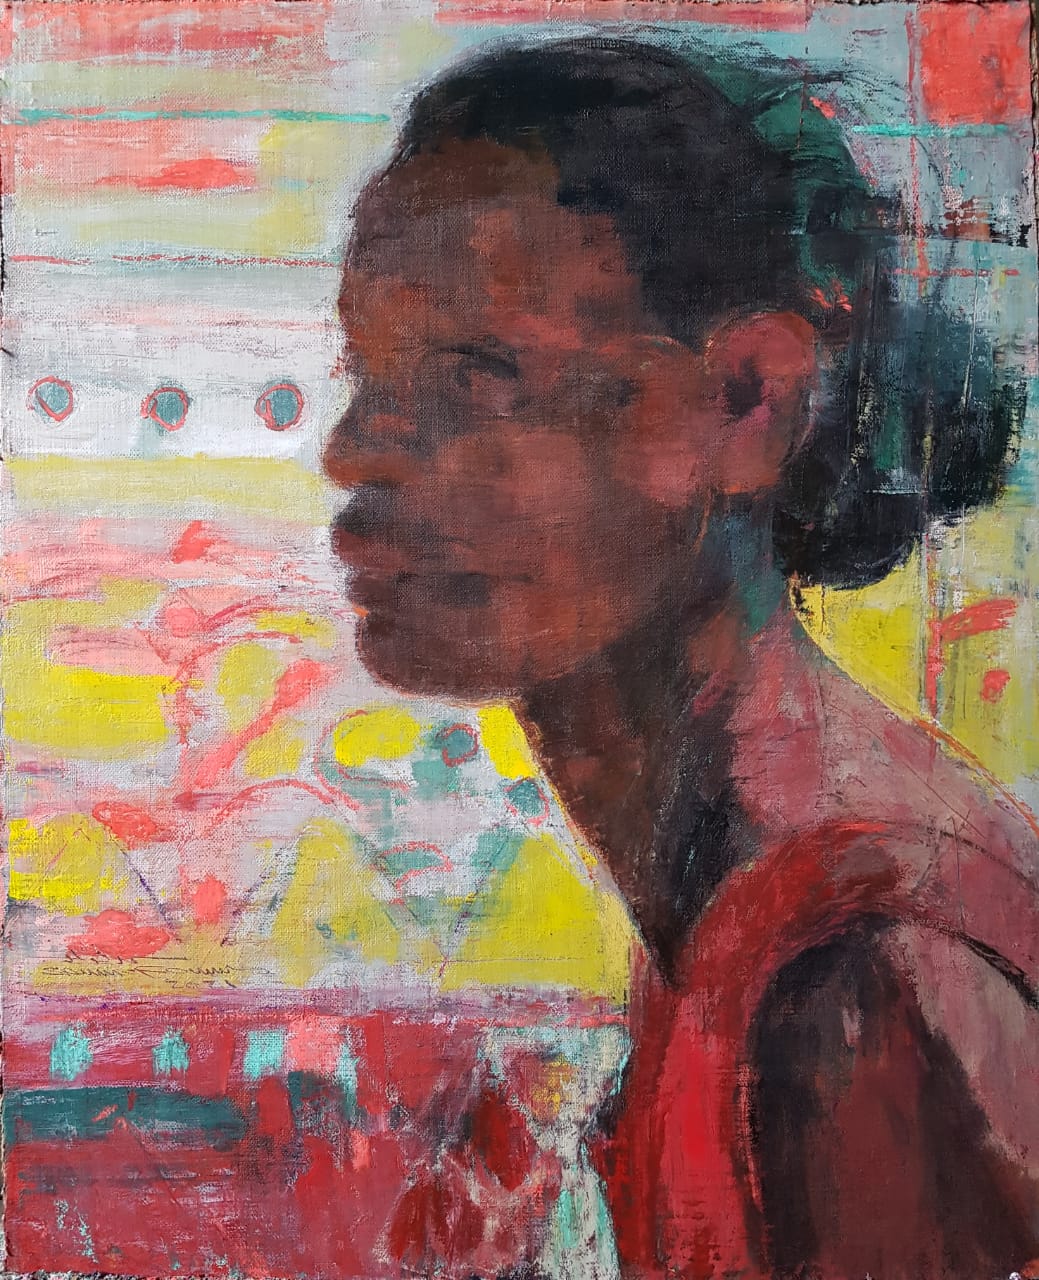 SAMIR FOUAD / Untitled / Oil on canvas / 40 x 50 cm  / LE 35,000 / USD 2,250 / PALESTINE-170